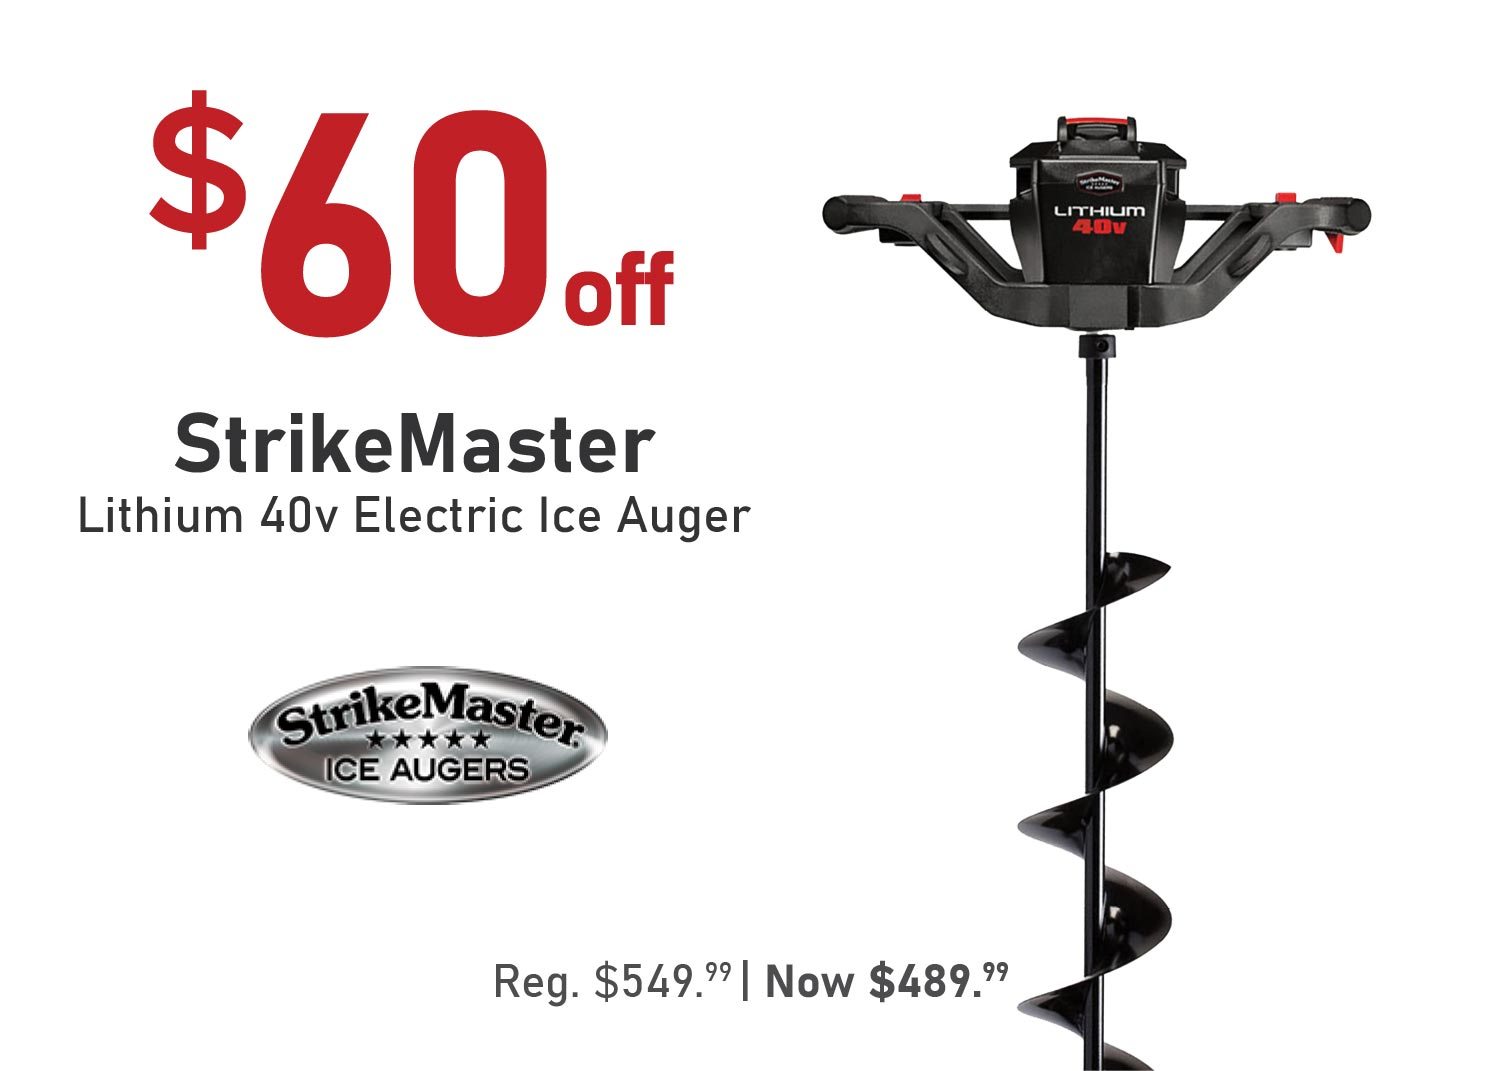 StrikeMaster Lithium 40v Electric Ice Auger $60 Off Reg. $549.99 | Now $489.99